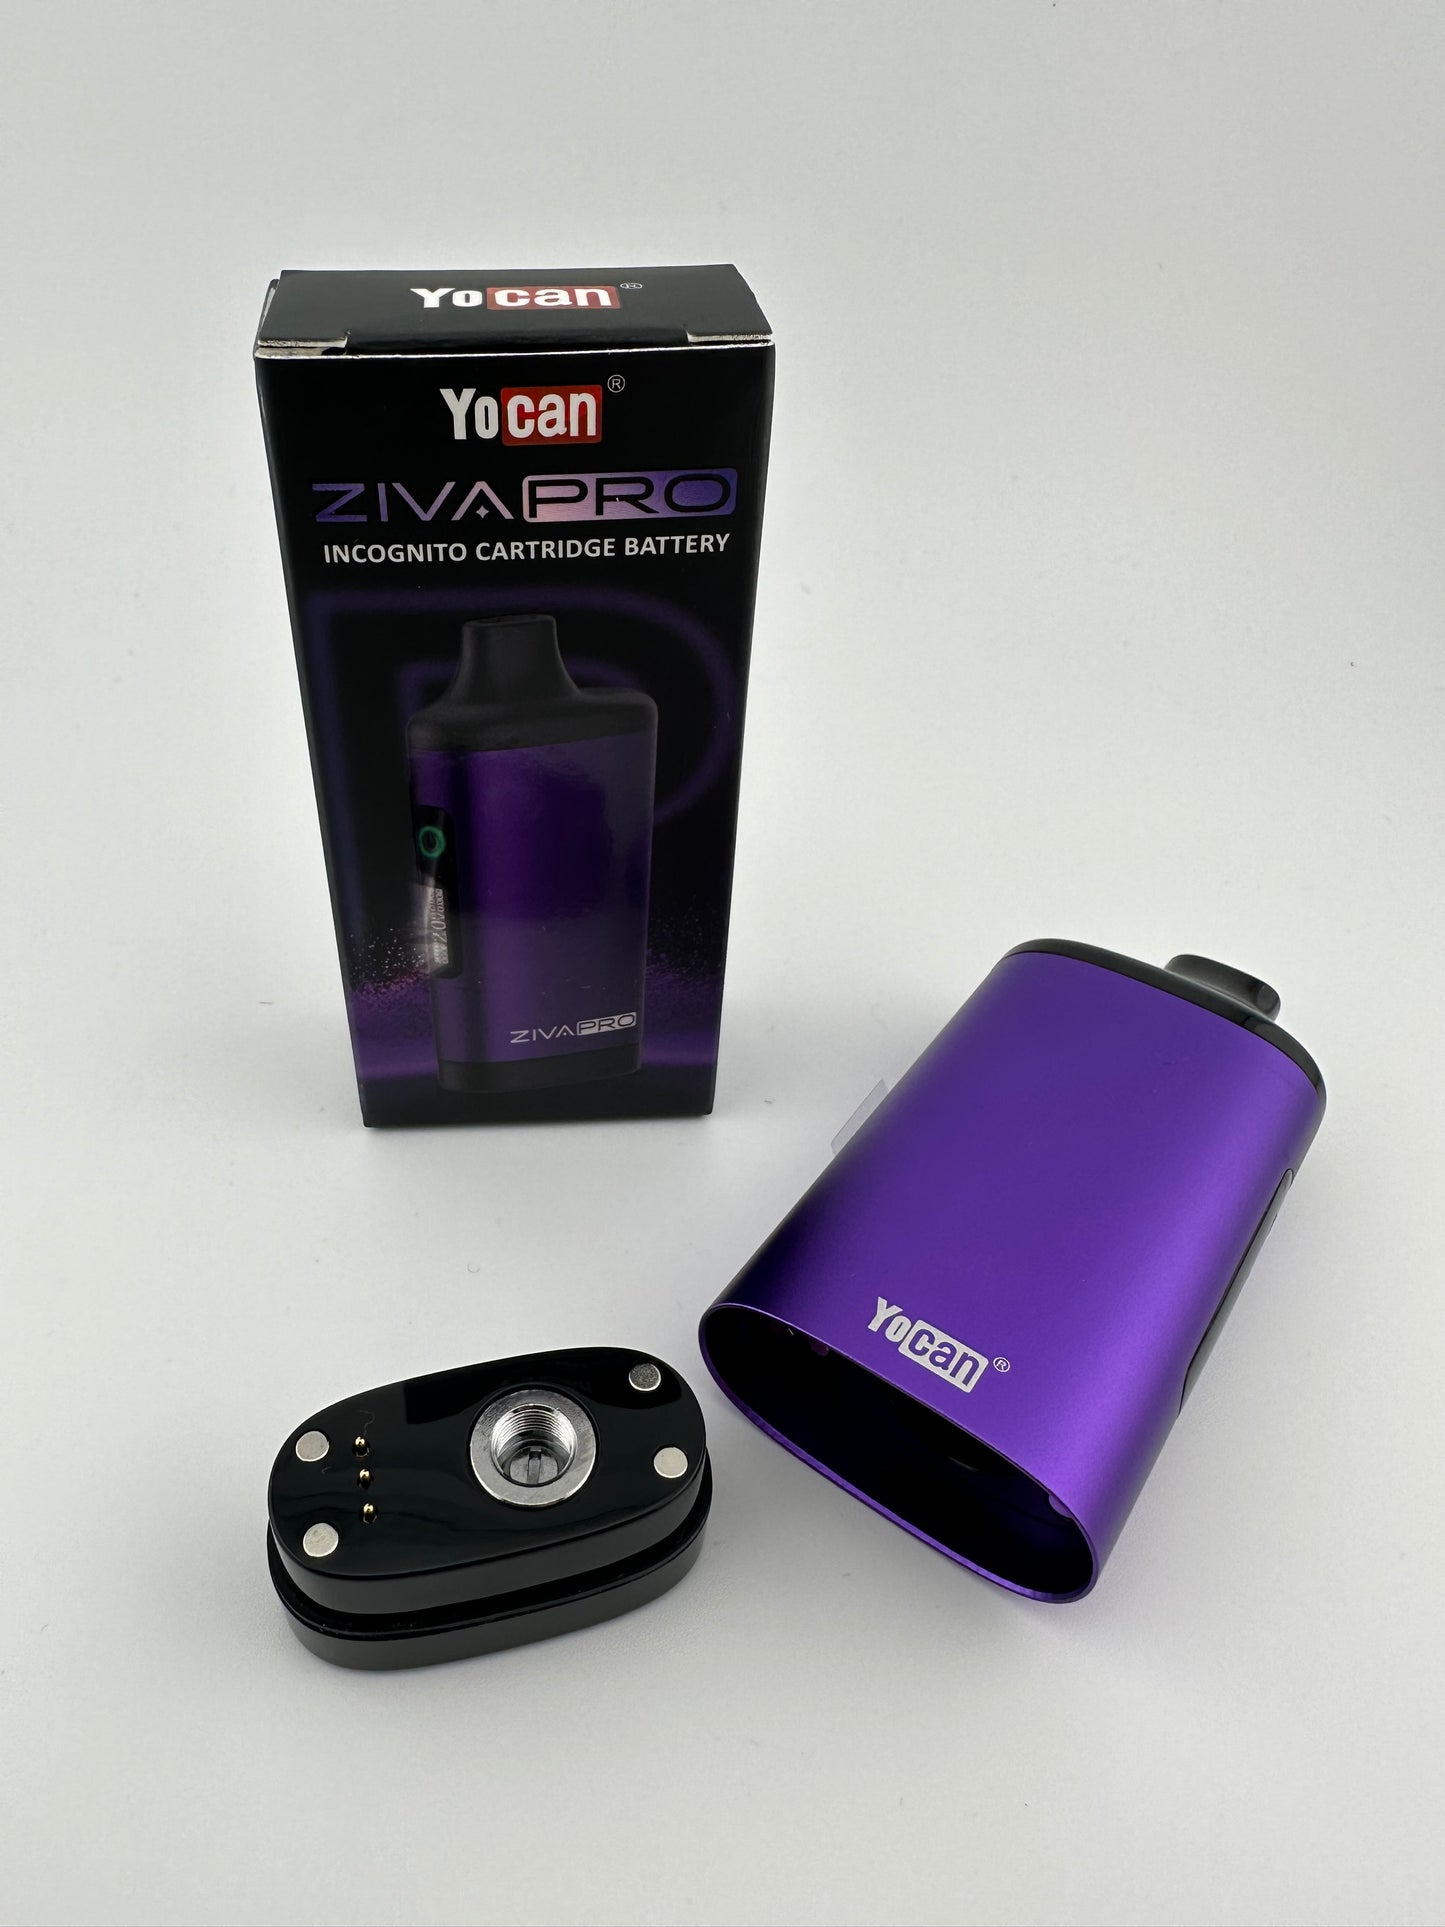 Yocan Ziva Pro Incognito Cart Battery